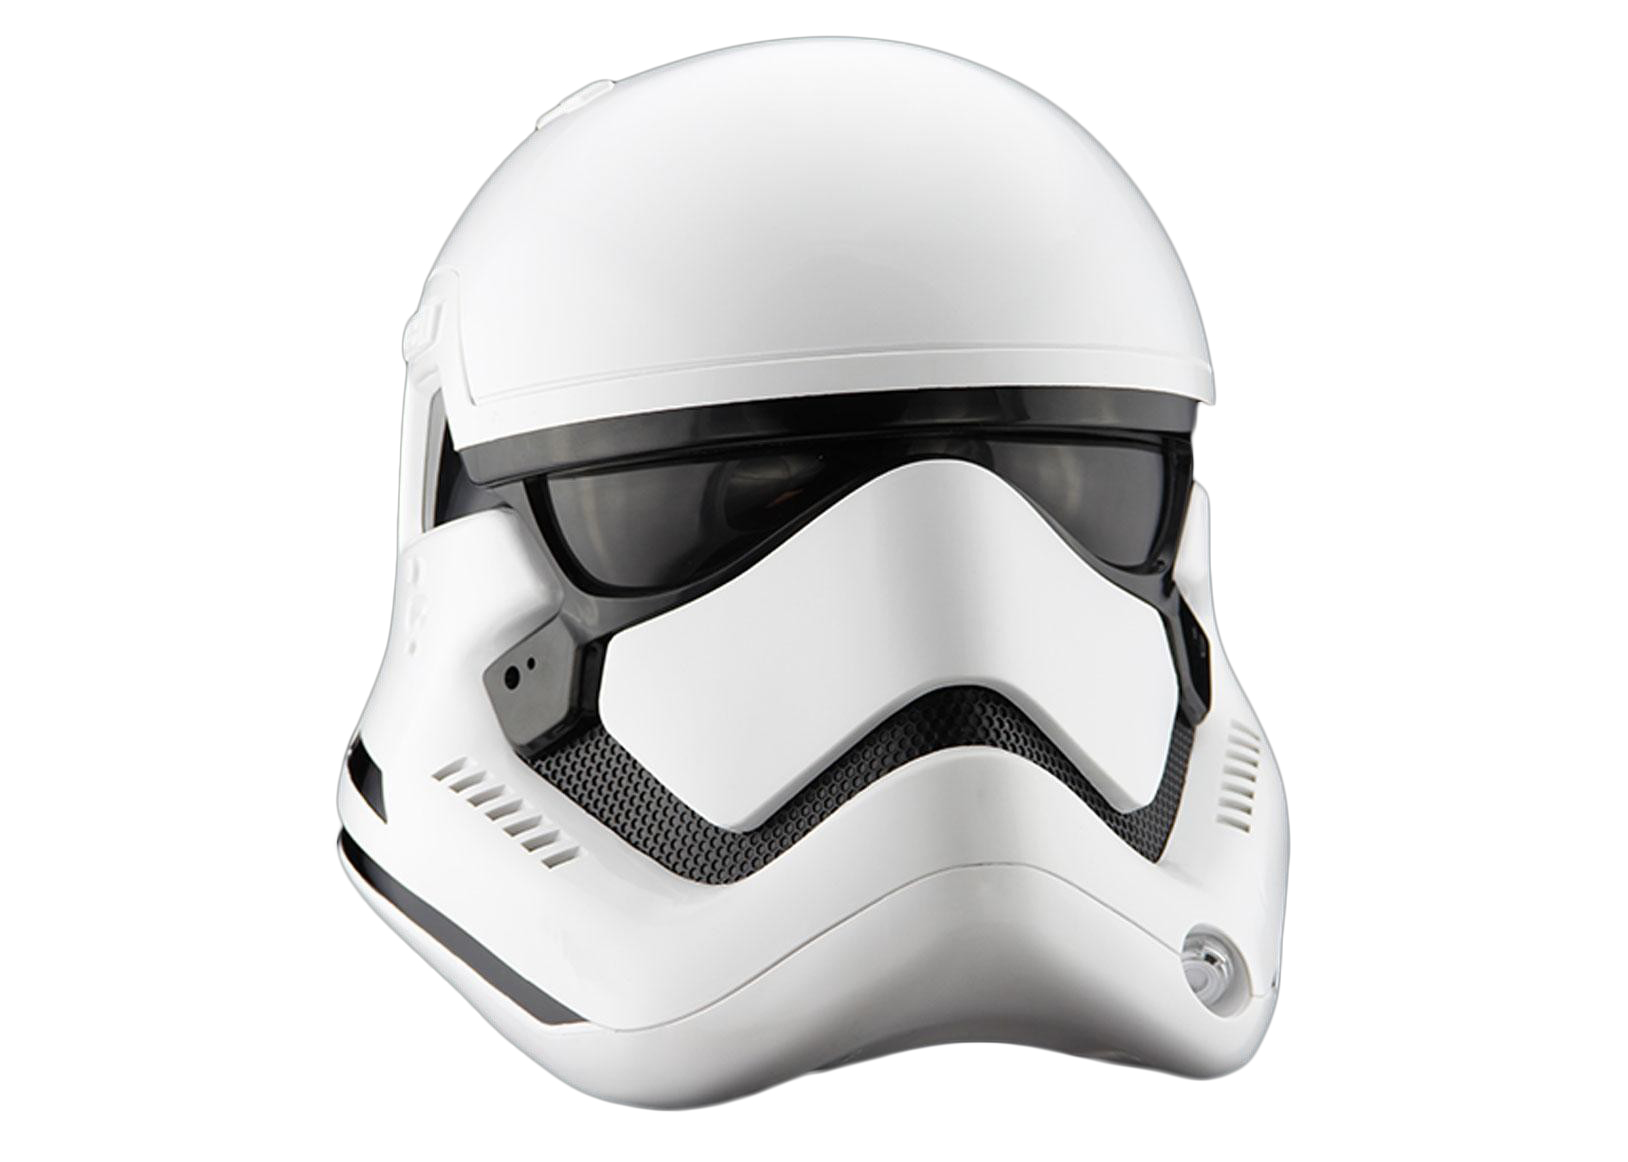 Star Wars First Order Stormtrooper Helmet The Force Awakens 